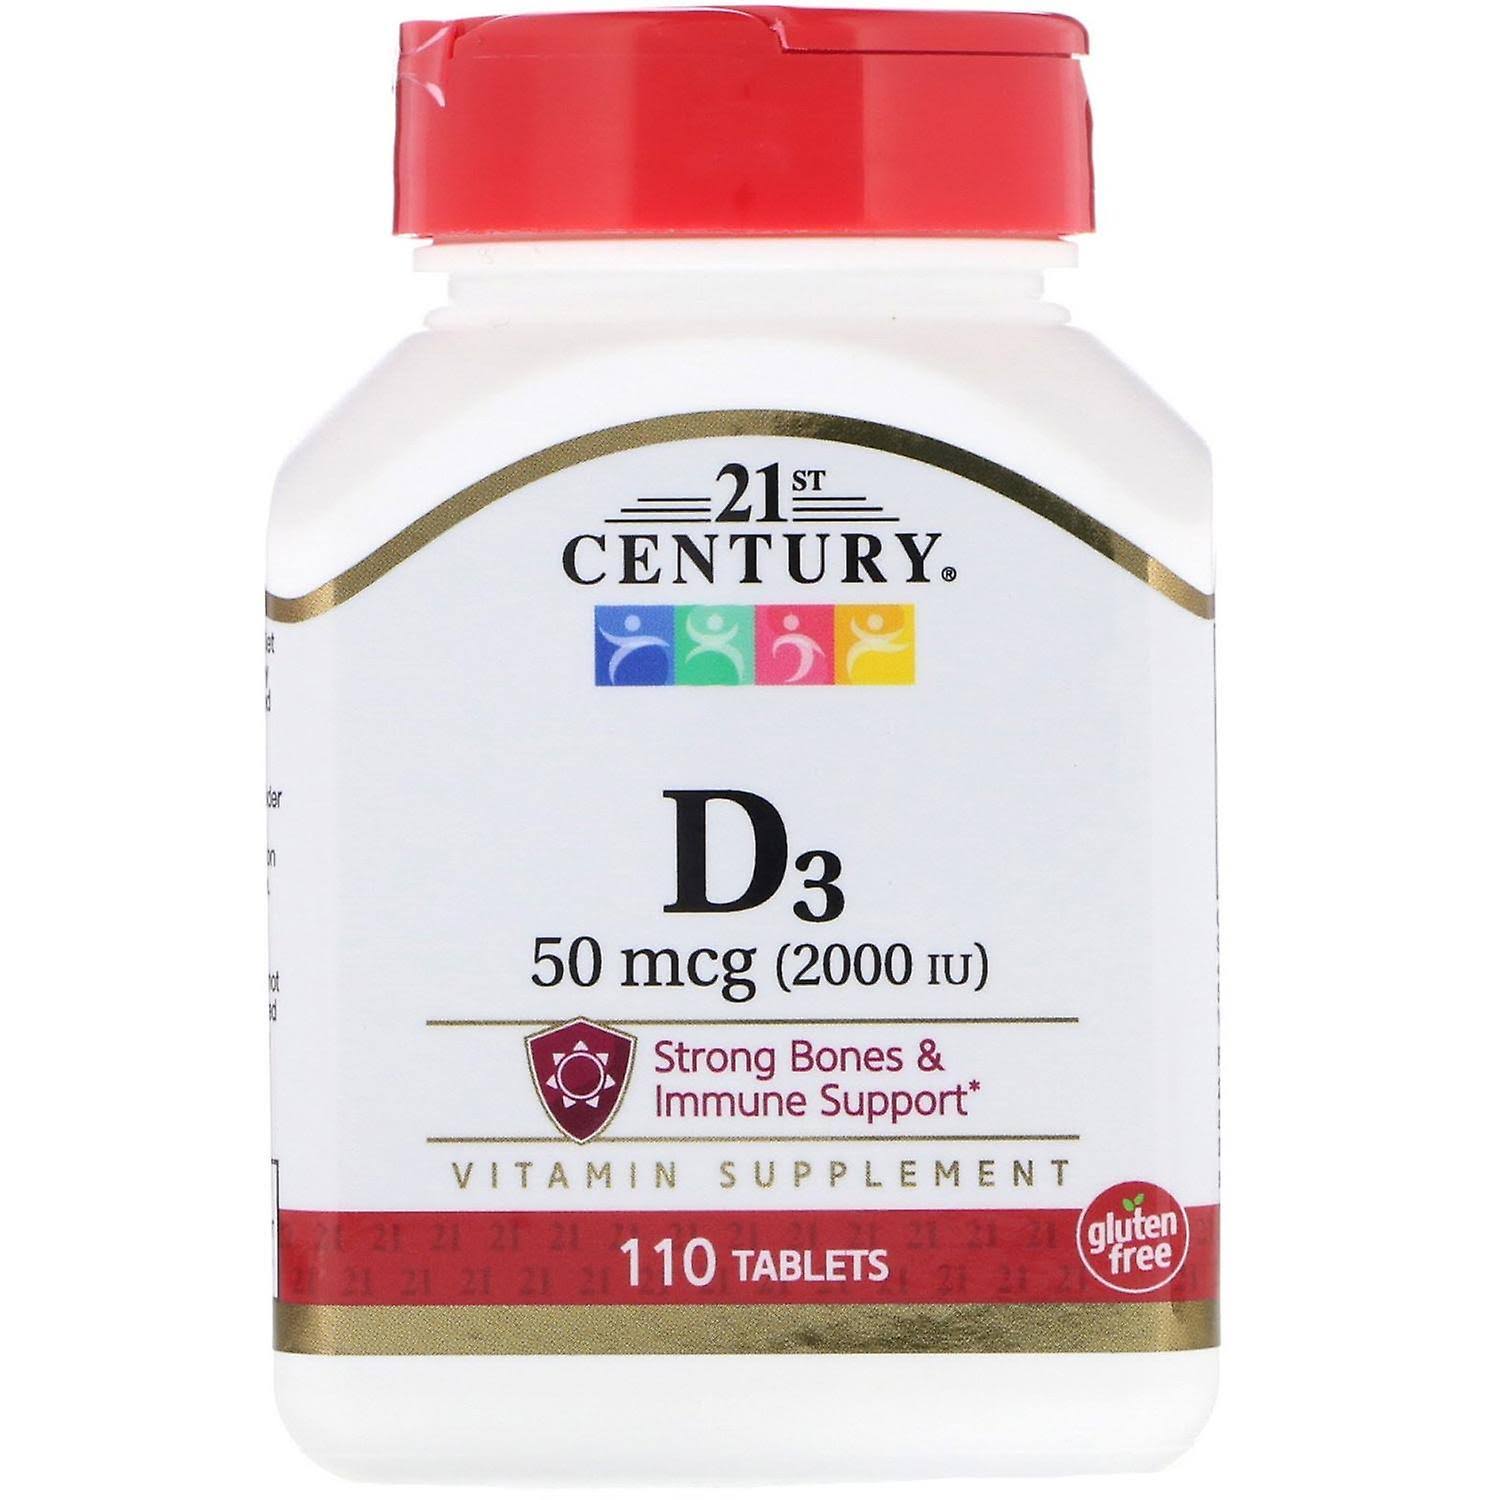 21st Century Vitamin D-2000 - Maximum Strength, 110 tablets